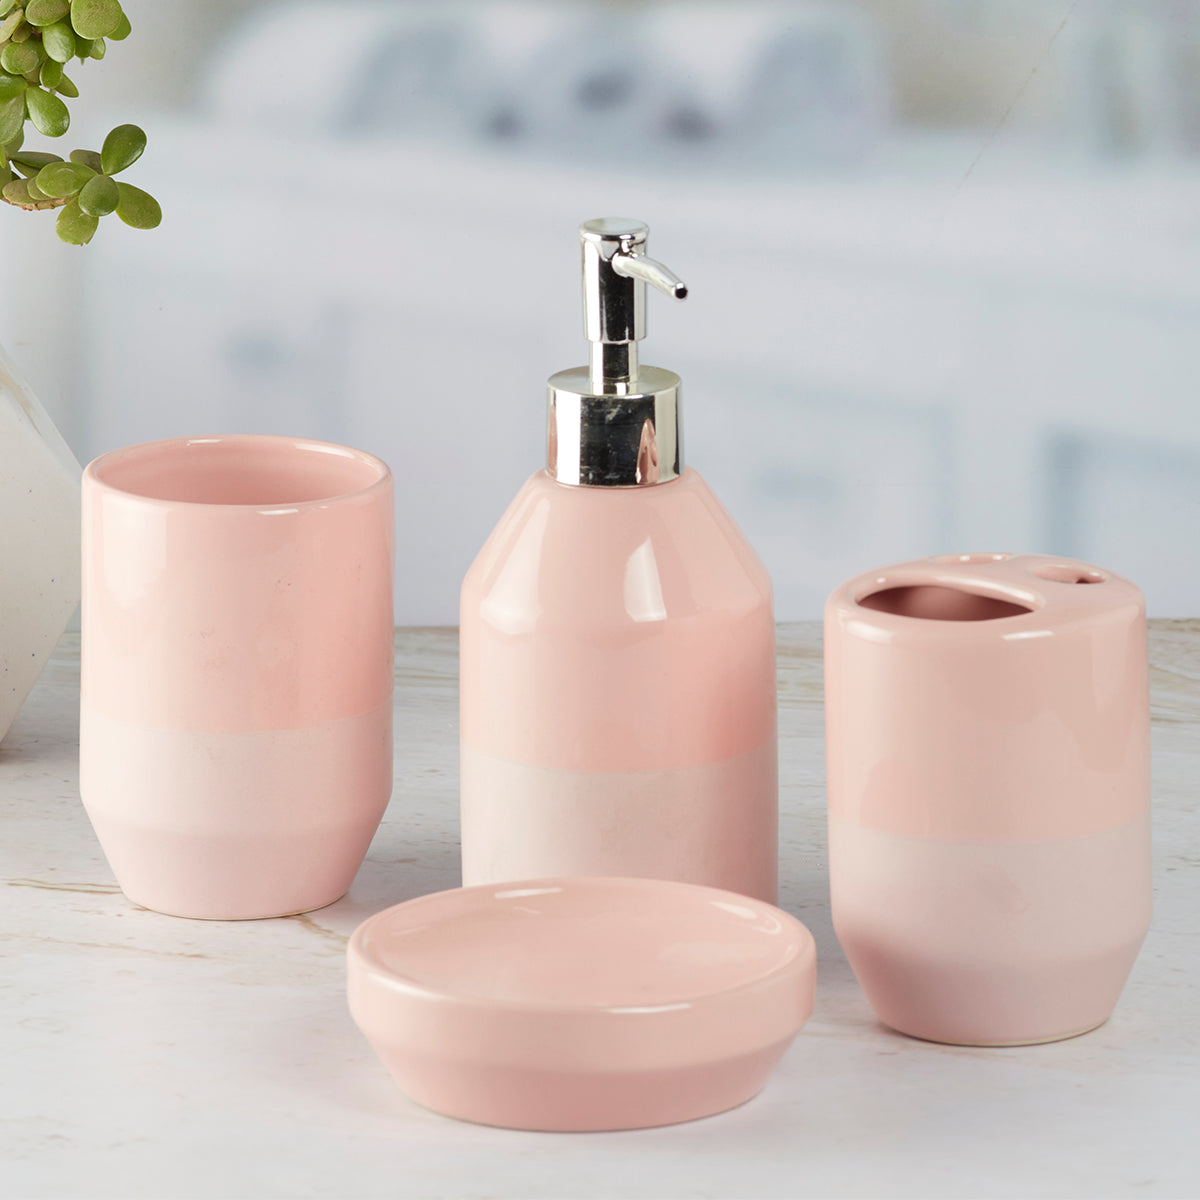 Ceramic Bathroom Accessories Set of 4 Bath Set with Soap Dispenser (9633)